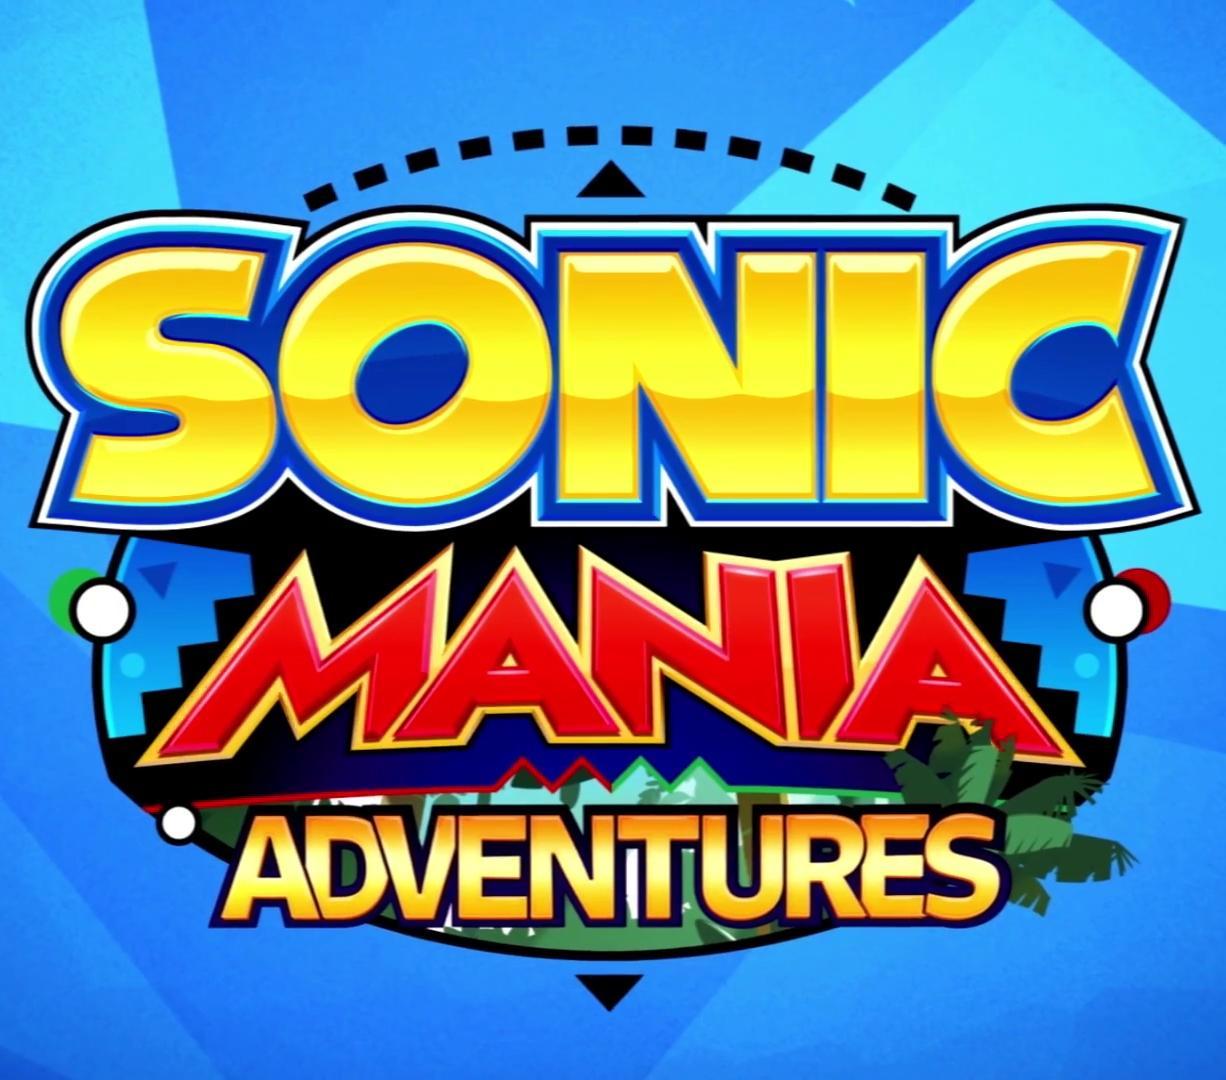 Sonic Mania Adventures (TV Mini Series 2018) - IMDb